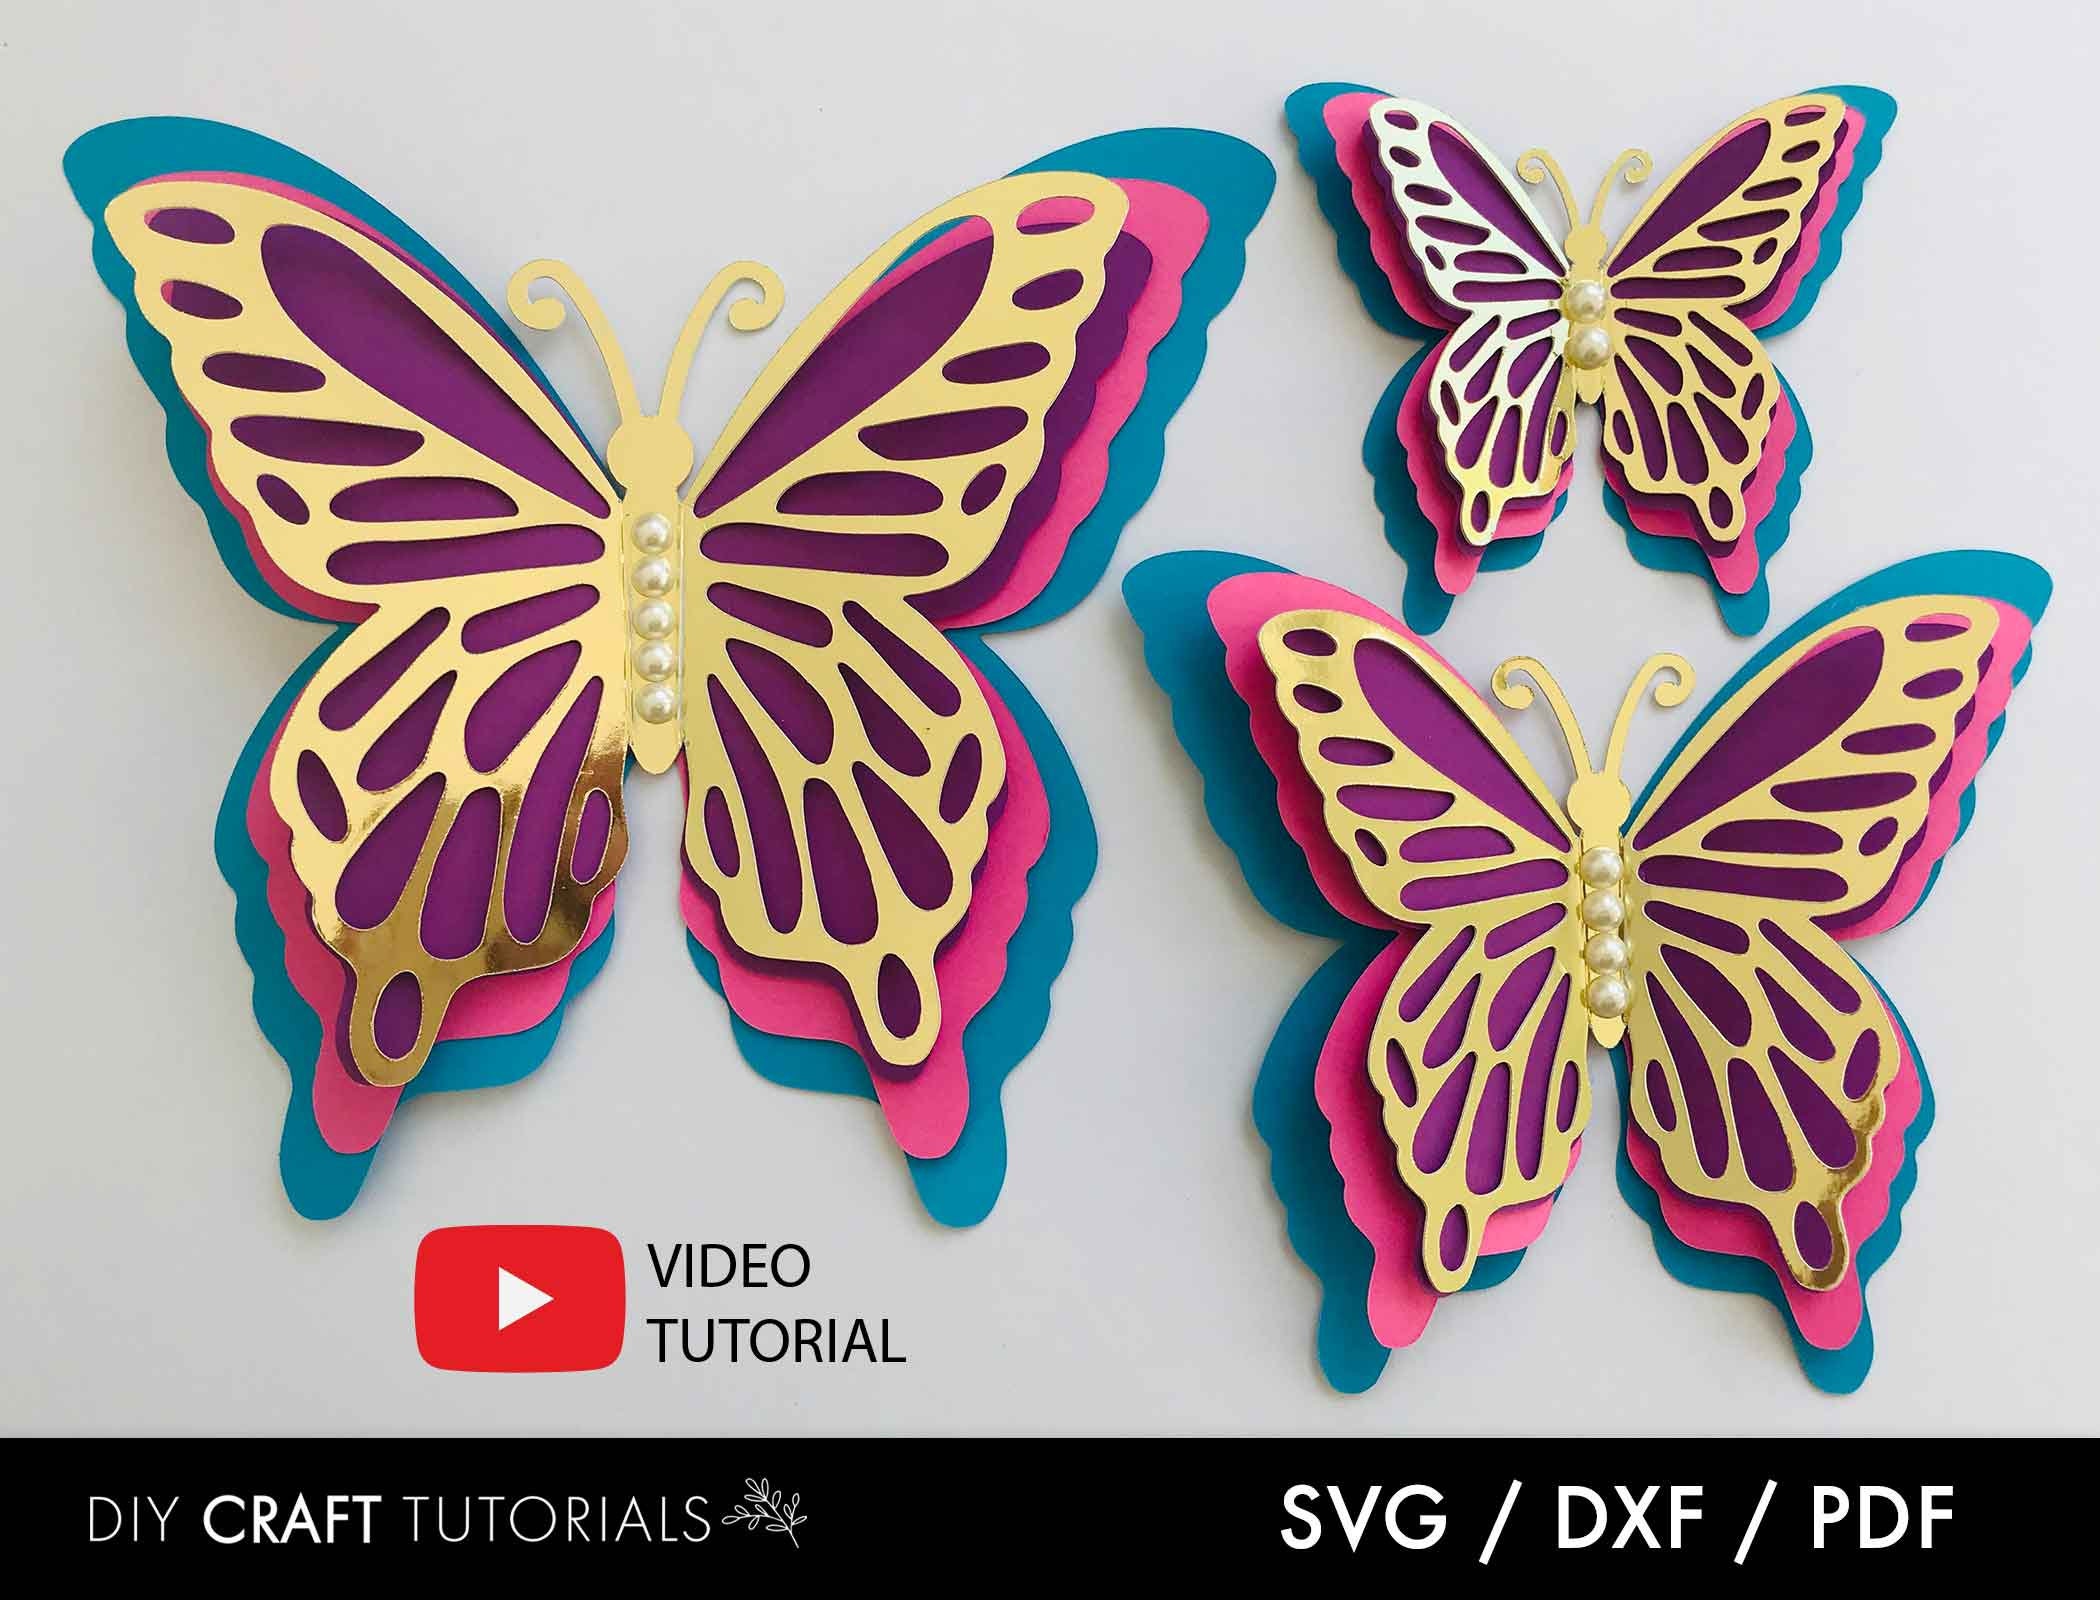  OATIPHO 36pcs Craft Butterfly-Shape Decors DIY Crafts Supplies  Diycutout Crafts DIY Craft Butterfly Crafts Butterfly Cutout Butterfly for  Crafts Foams Craft Wall Stickers eva Modeling